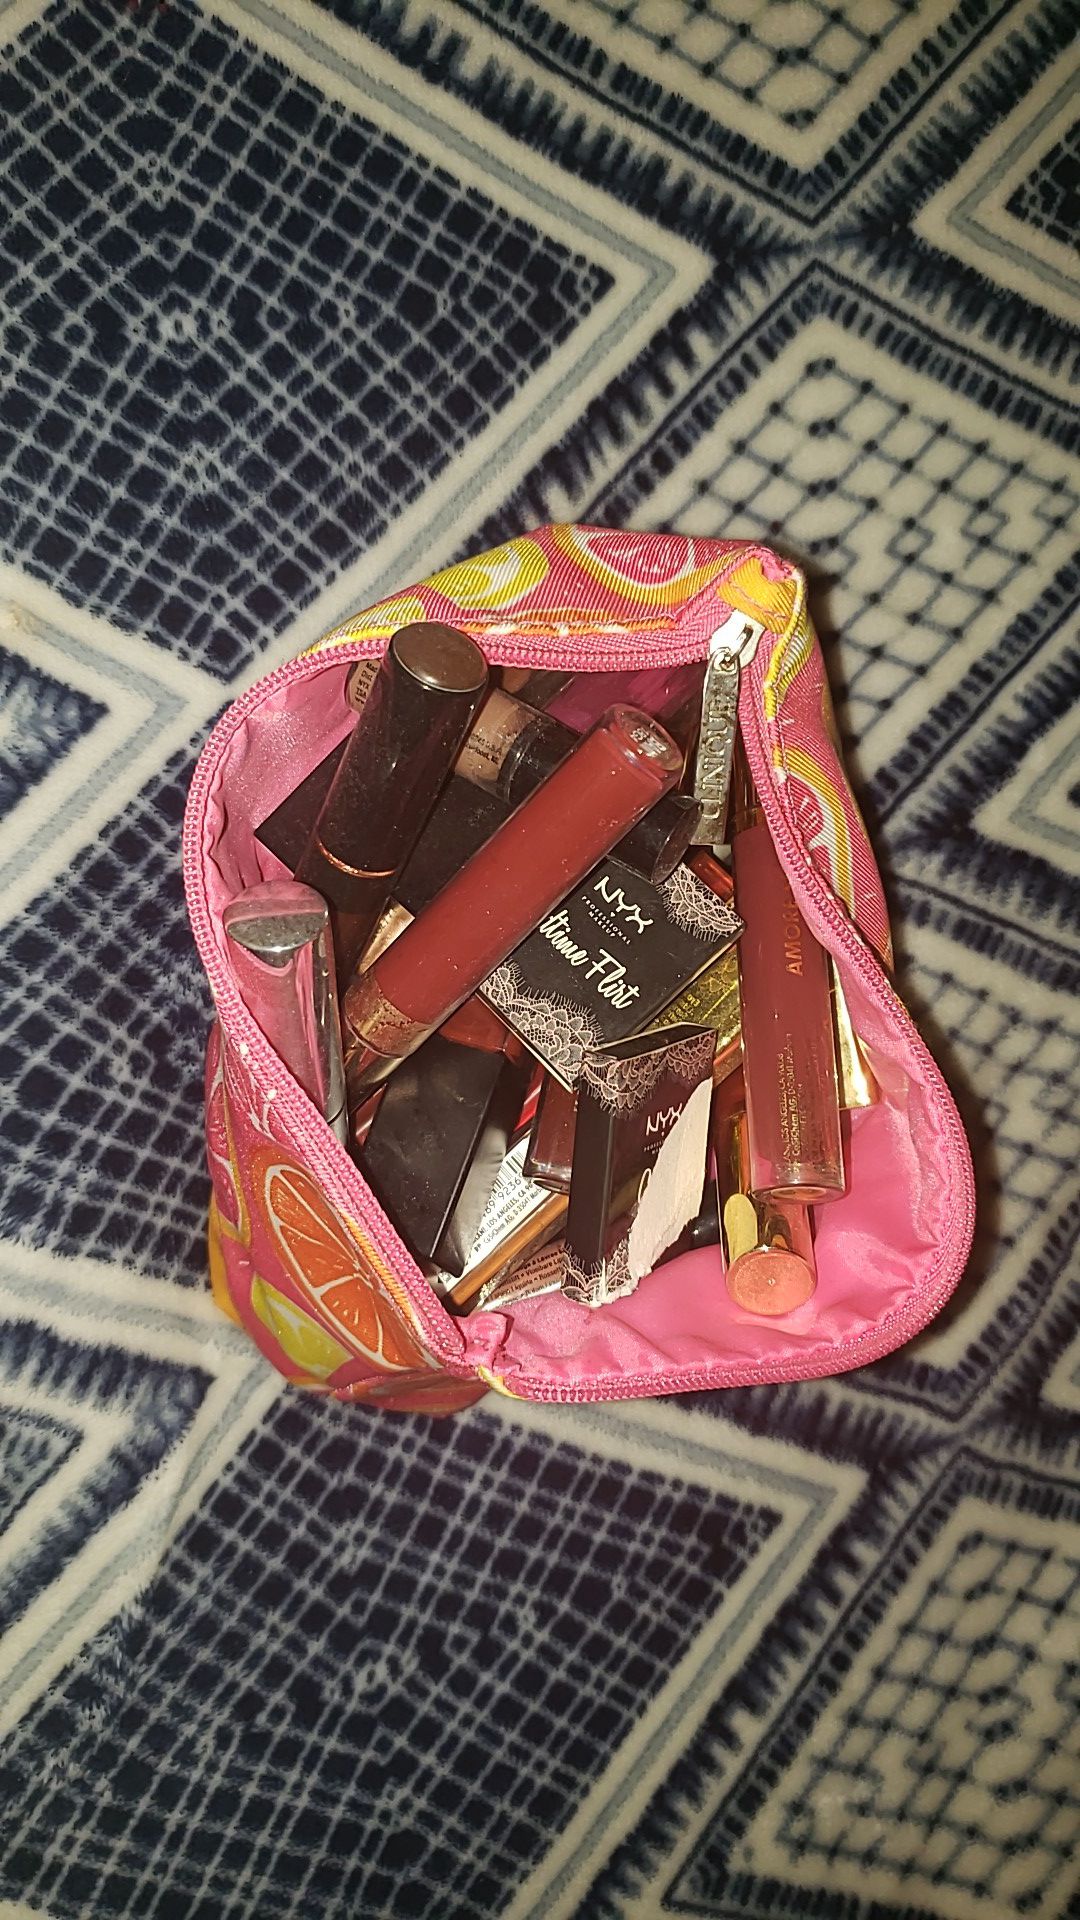 Makeup bag full of liquid lipstick and makeup brushes